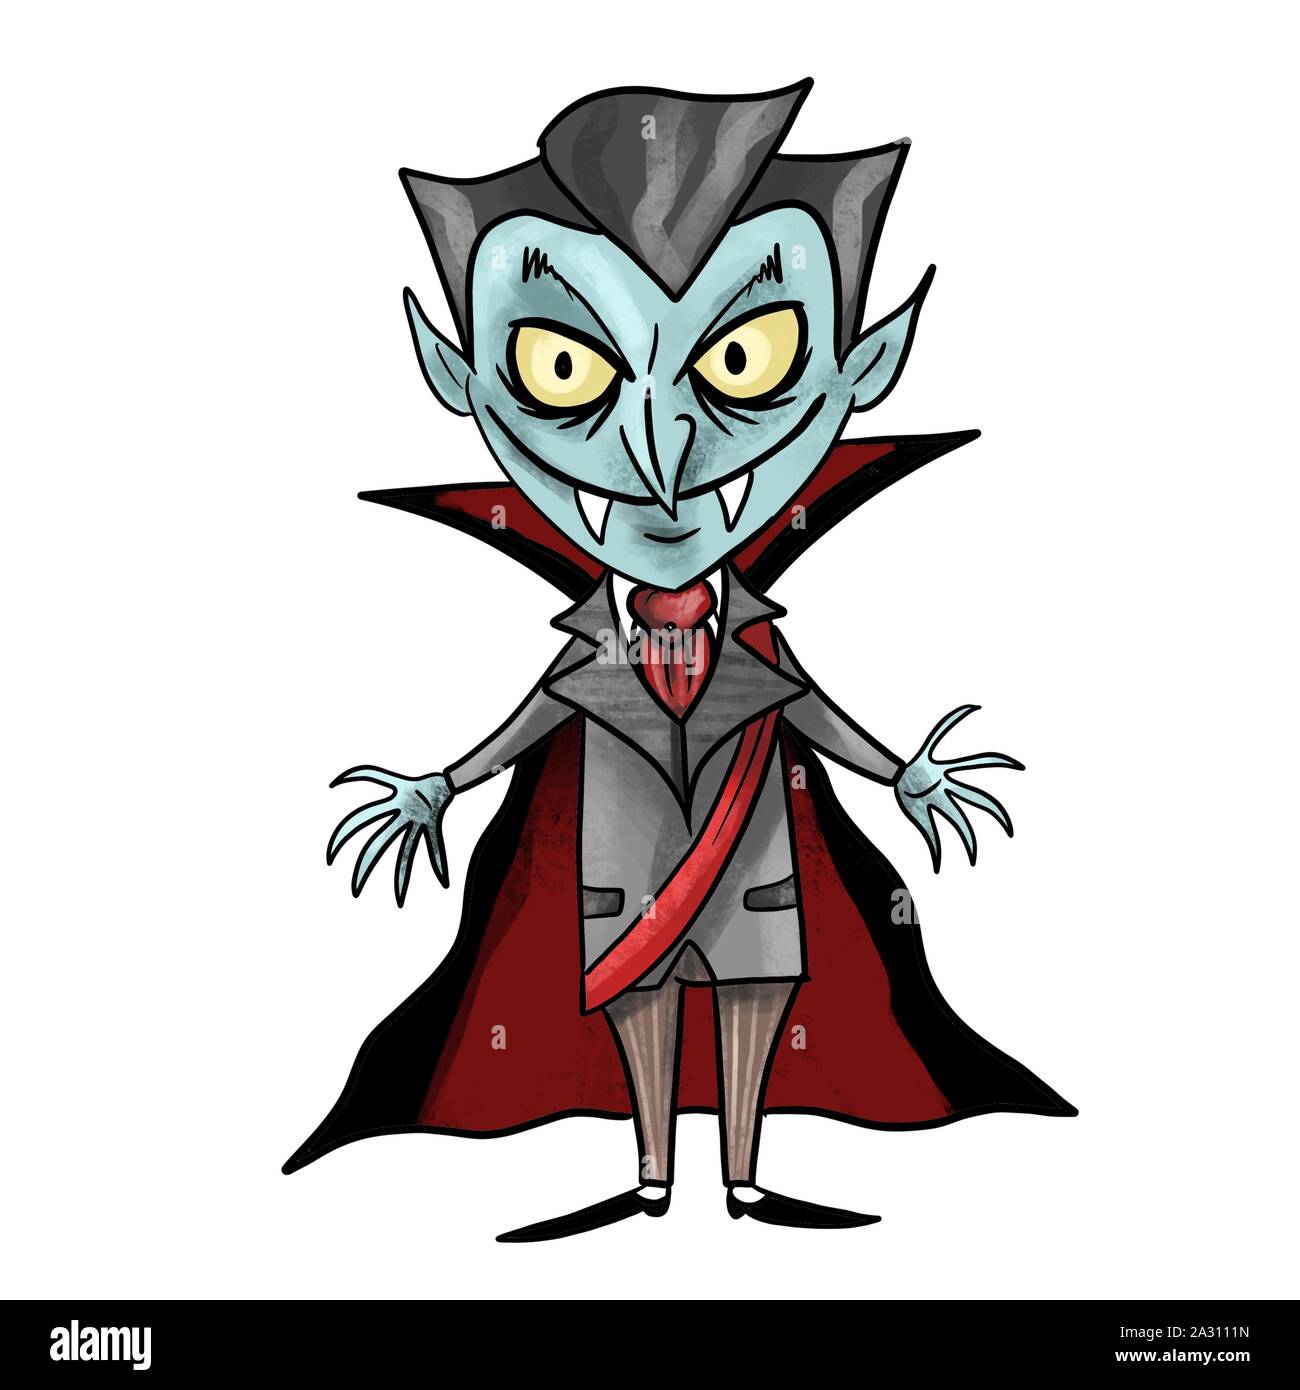 A vampire cartoon illustration Stock Photo - Alamy